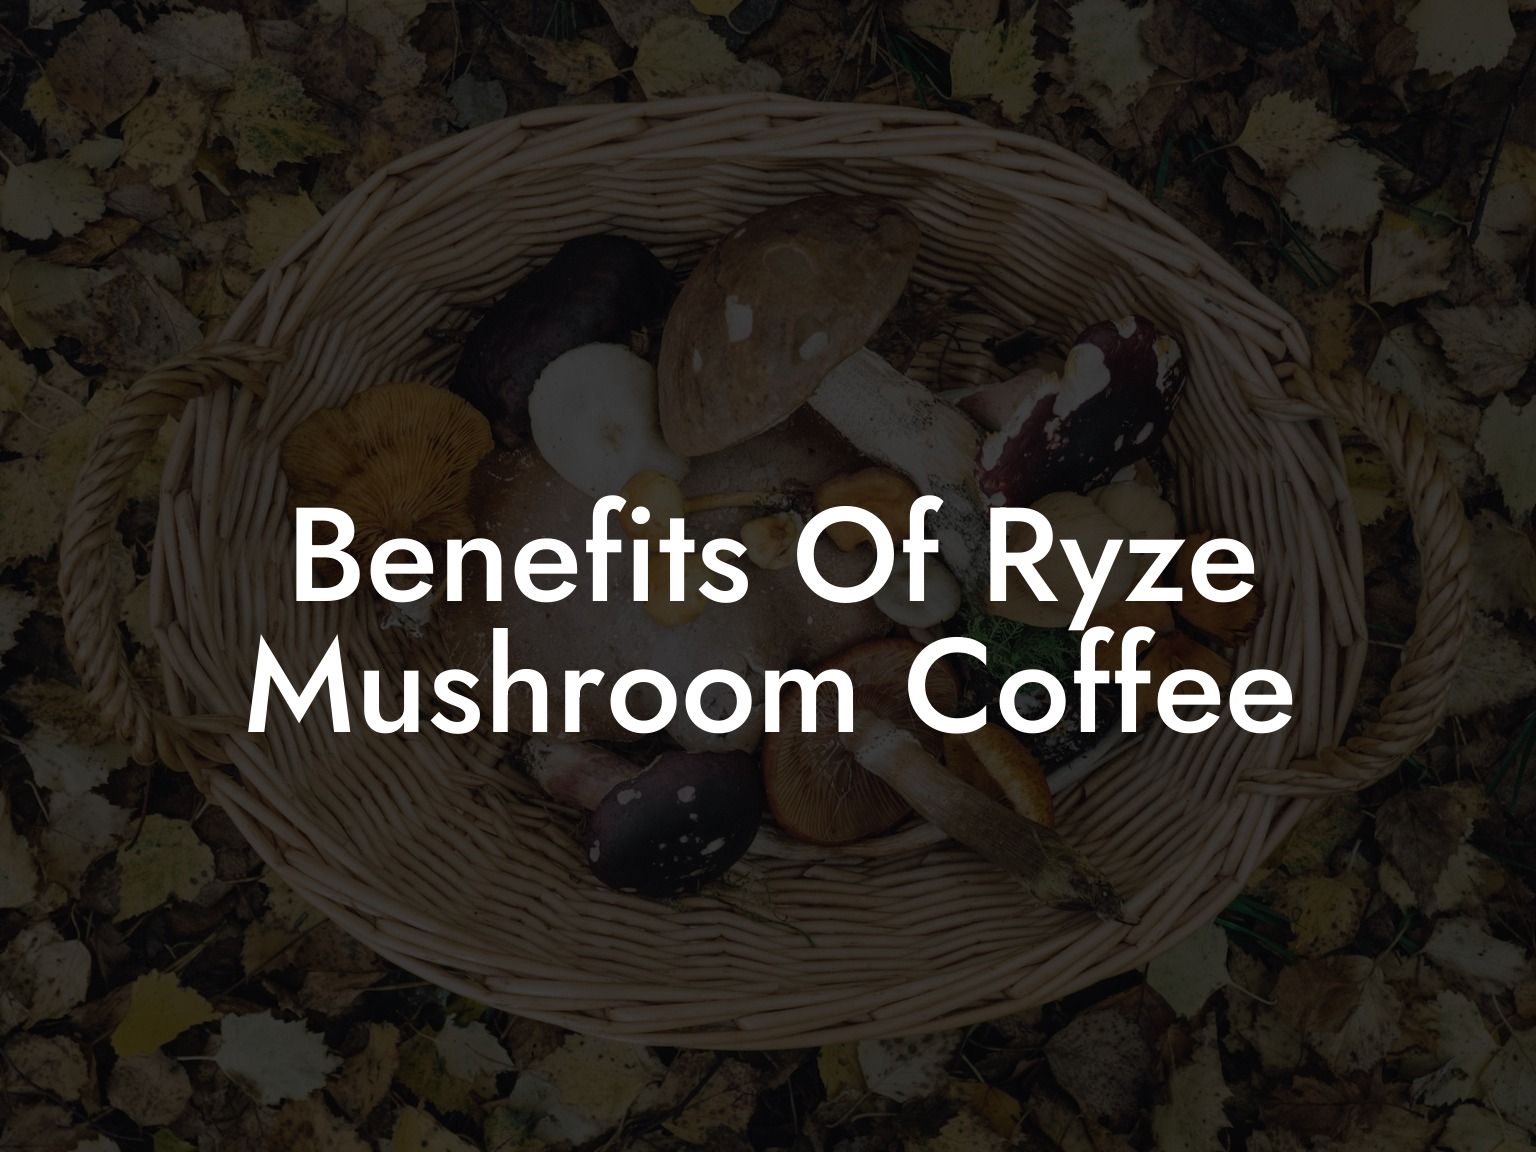 Benefits Of Ryze Mushroom Coffee